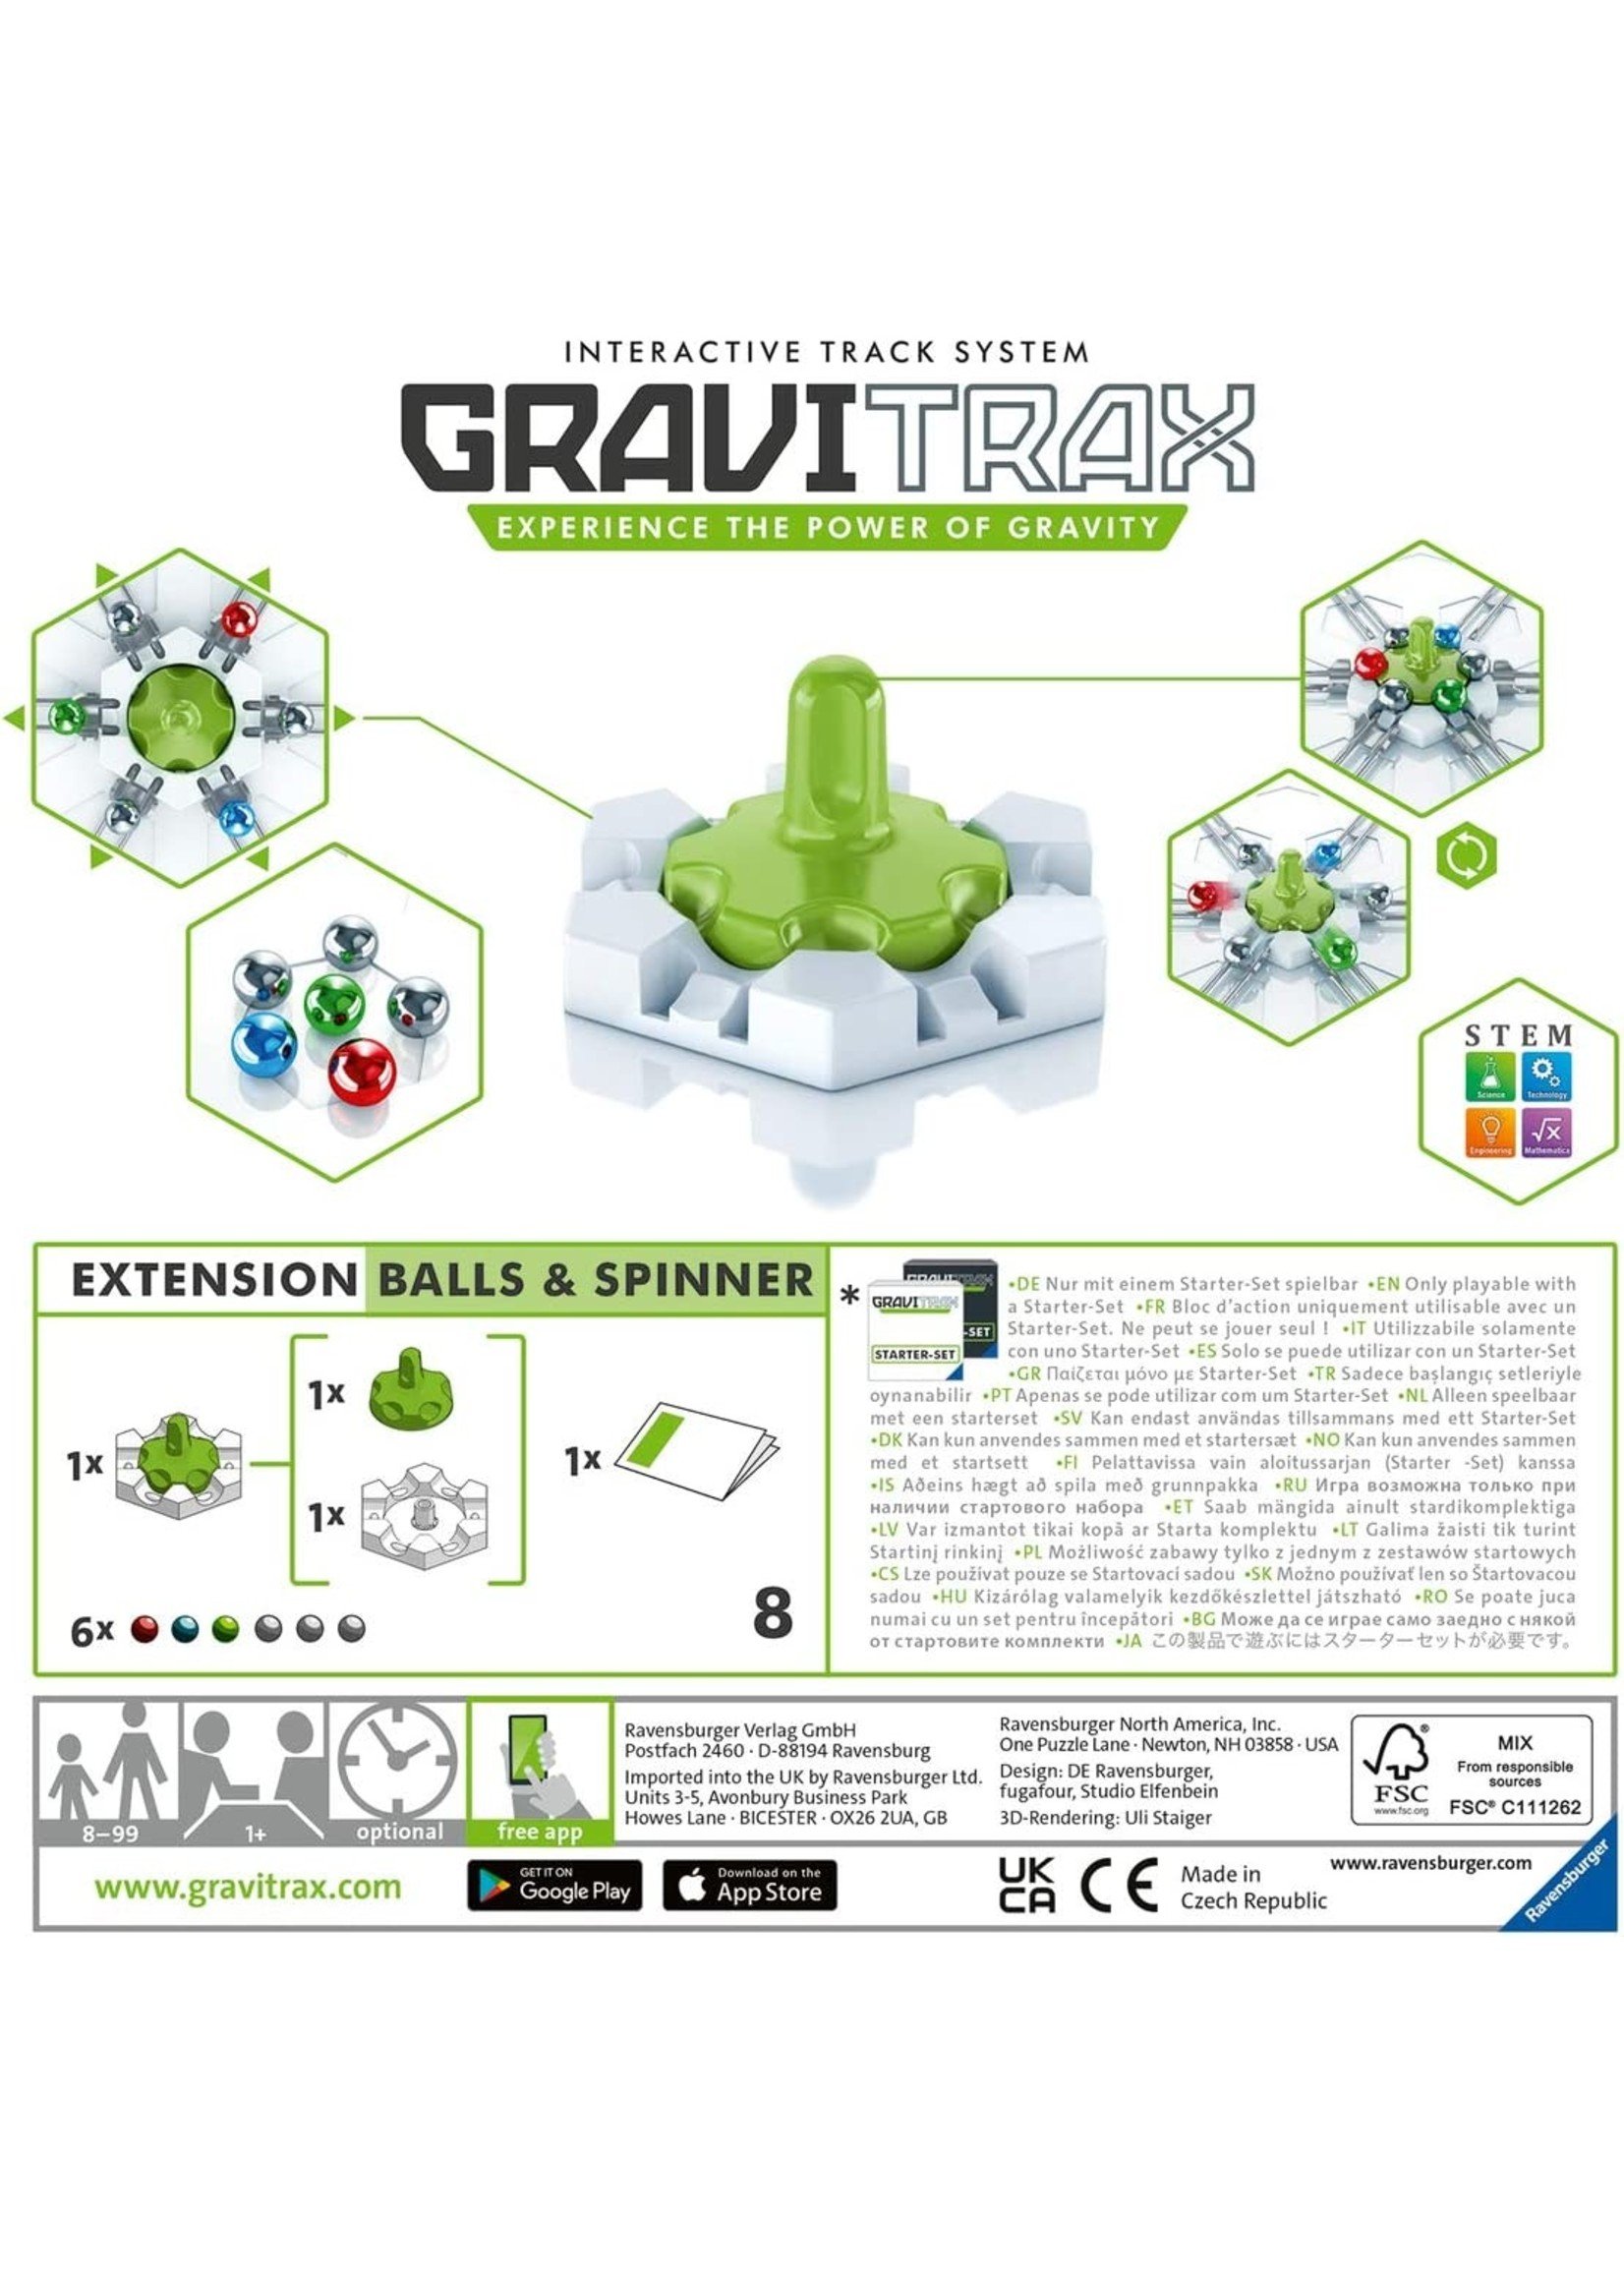 Ravensburger GraviTrax - Spiral Expansion Set